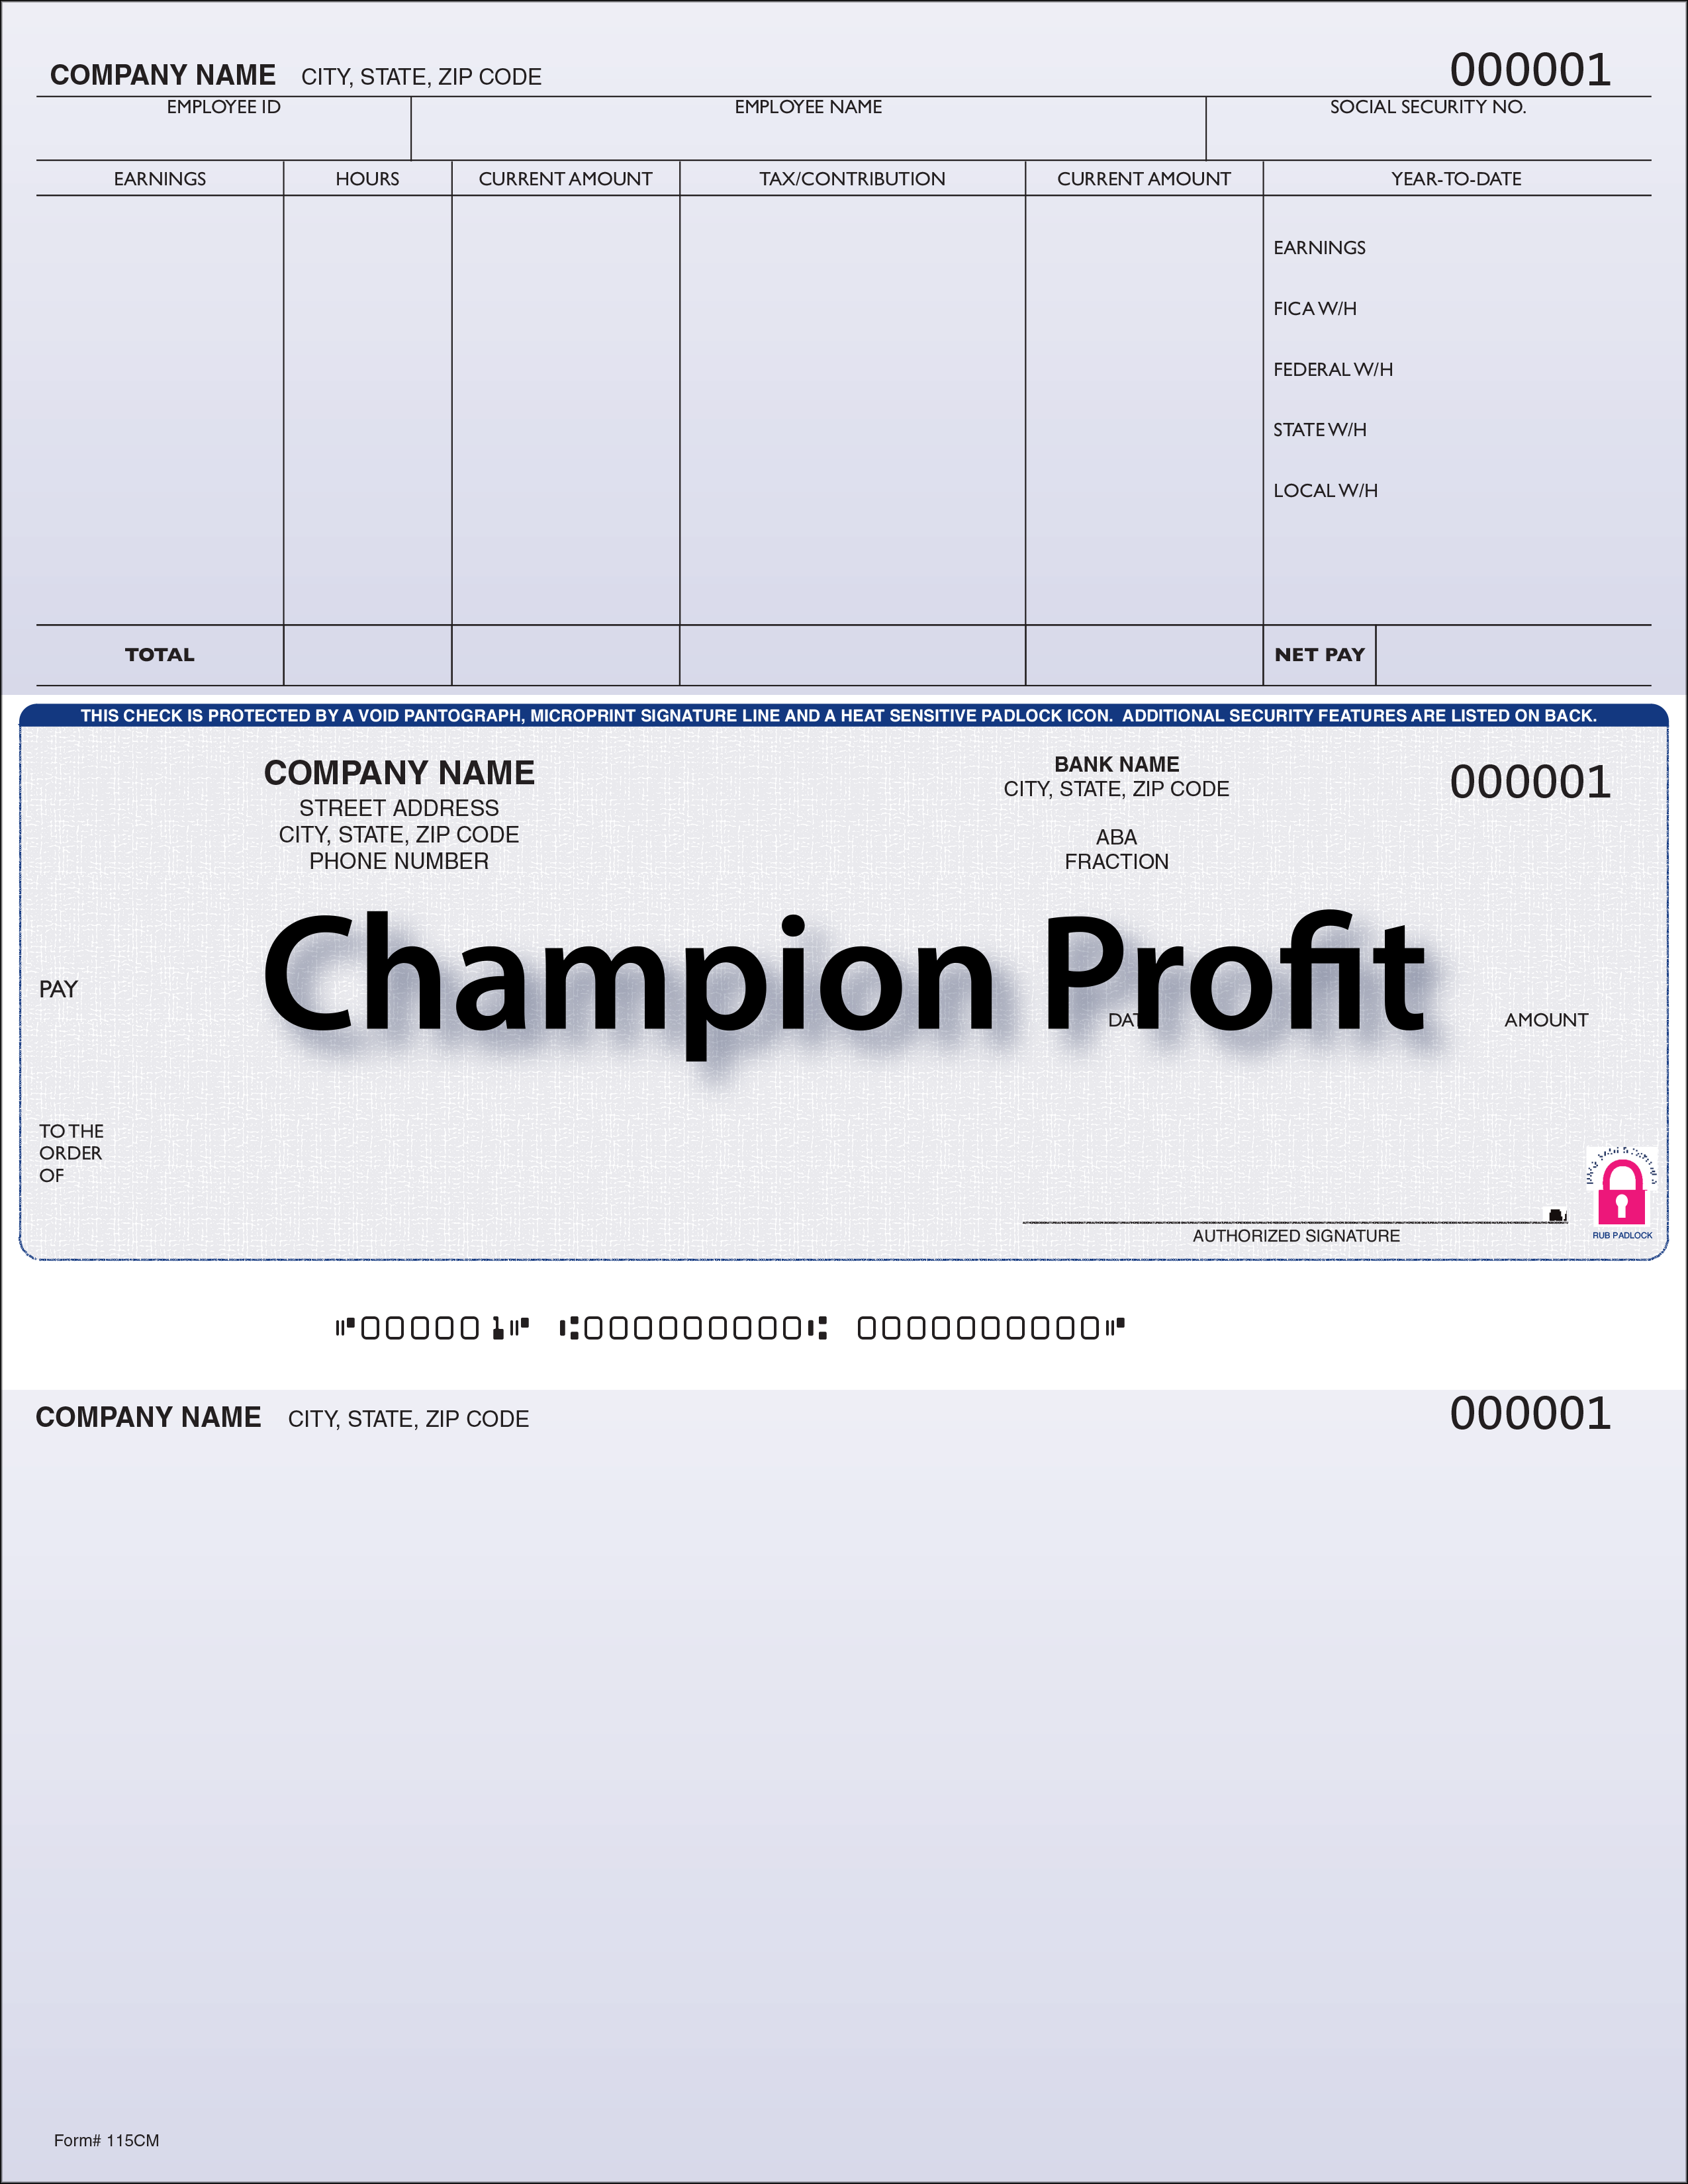 Champion Profit